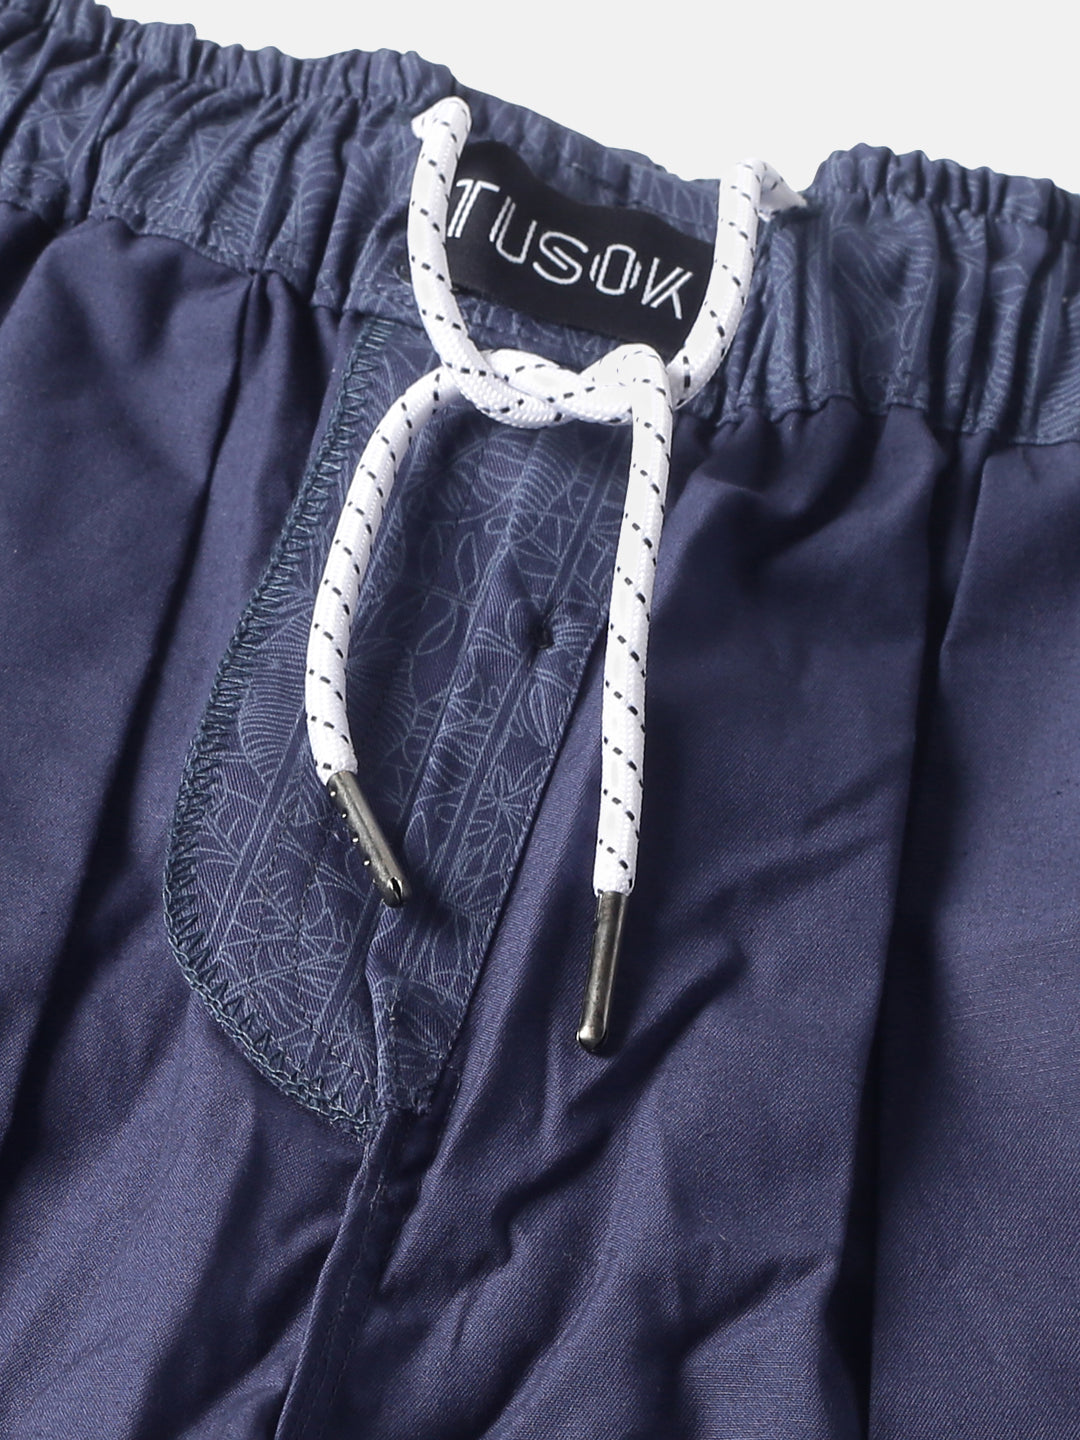 Charcoal Men's Printed Shorts - Tusok